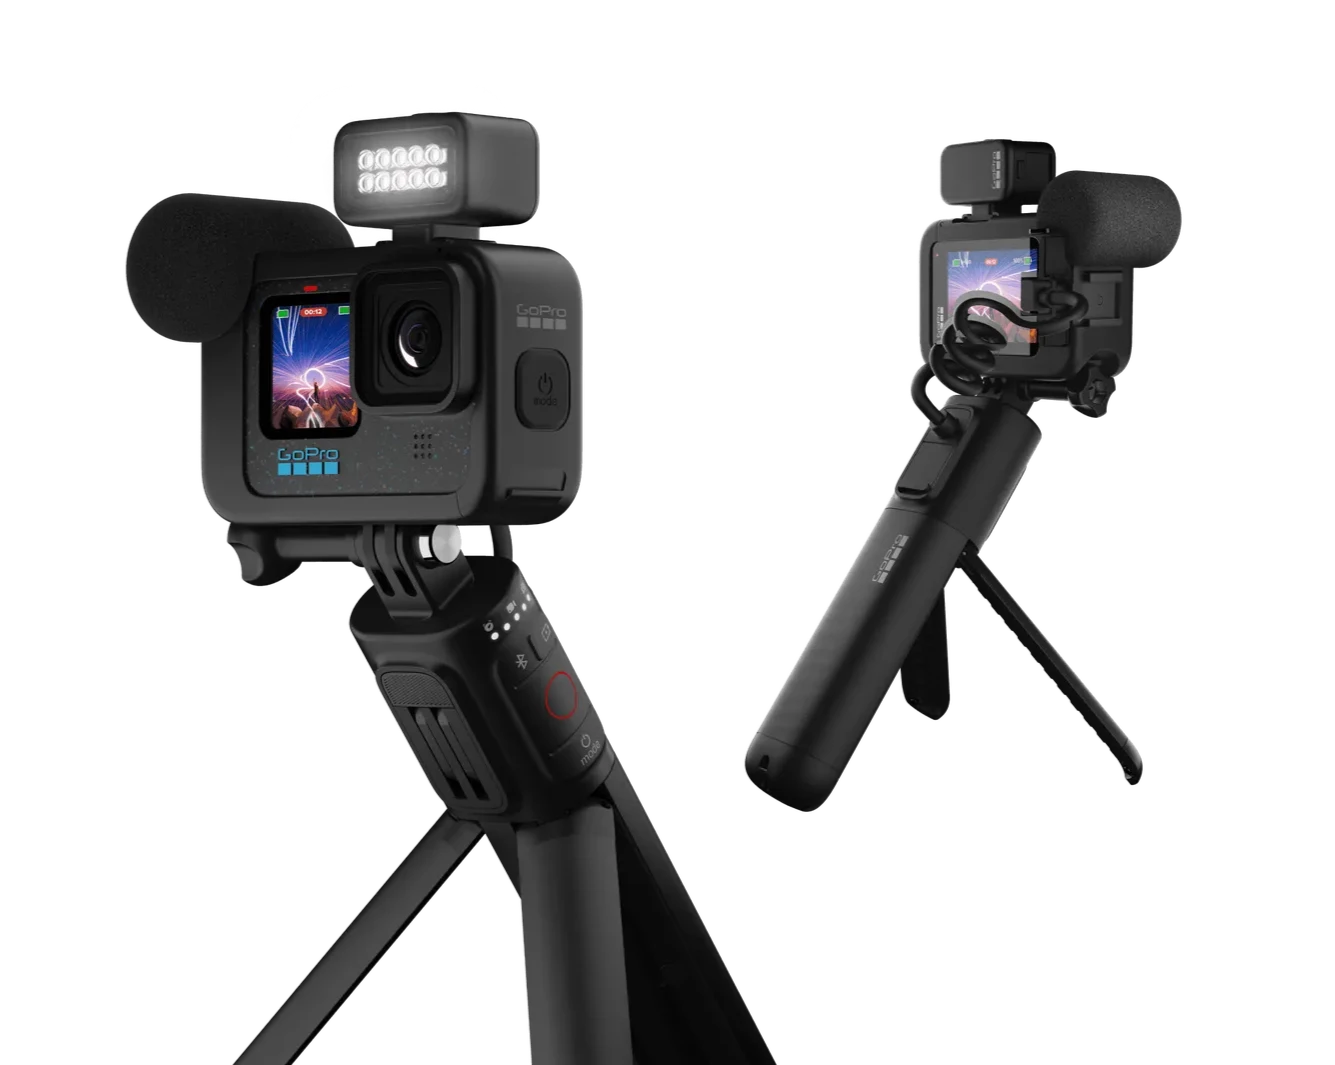 GoPro Hero 12 Action Camera